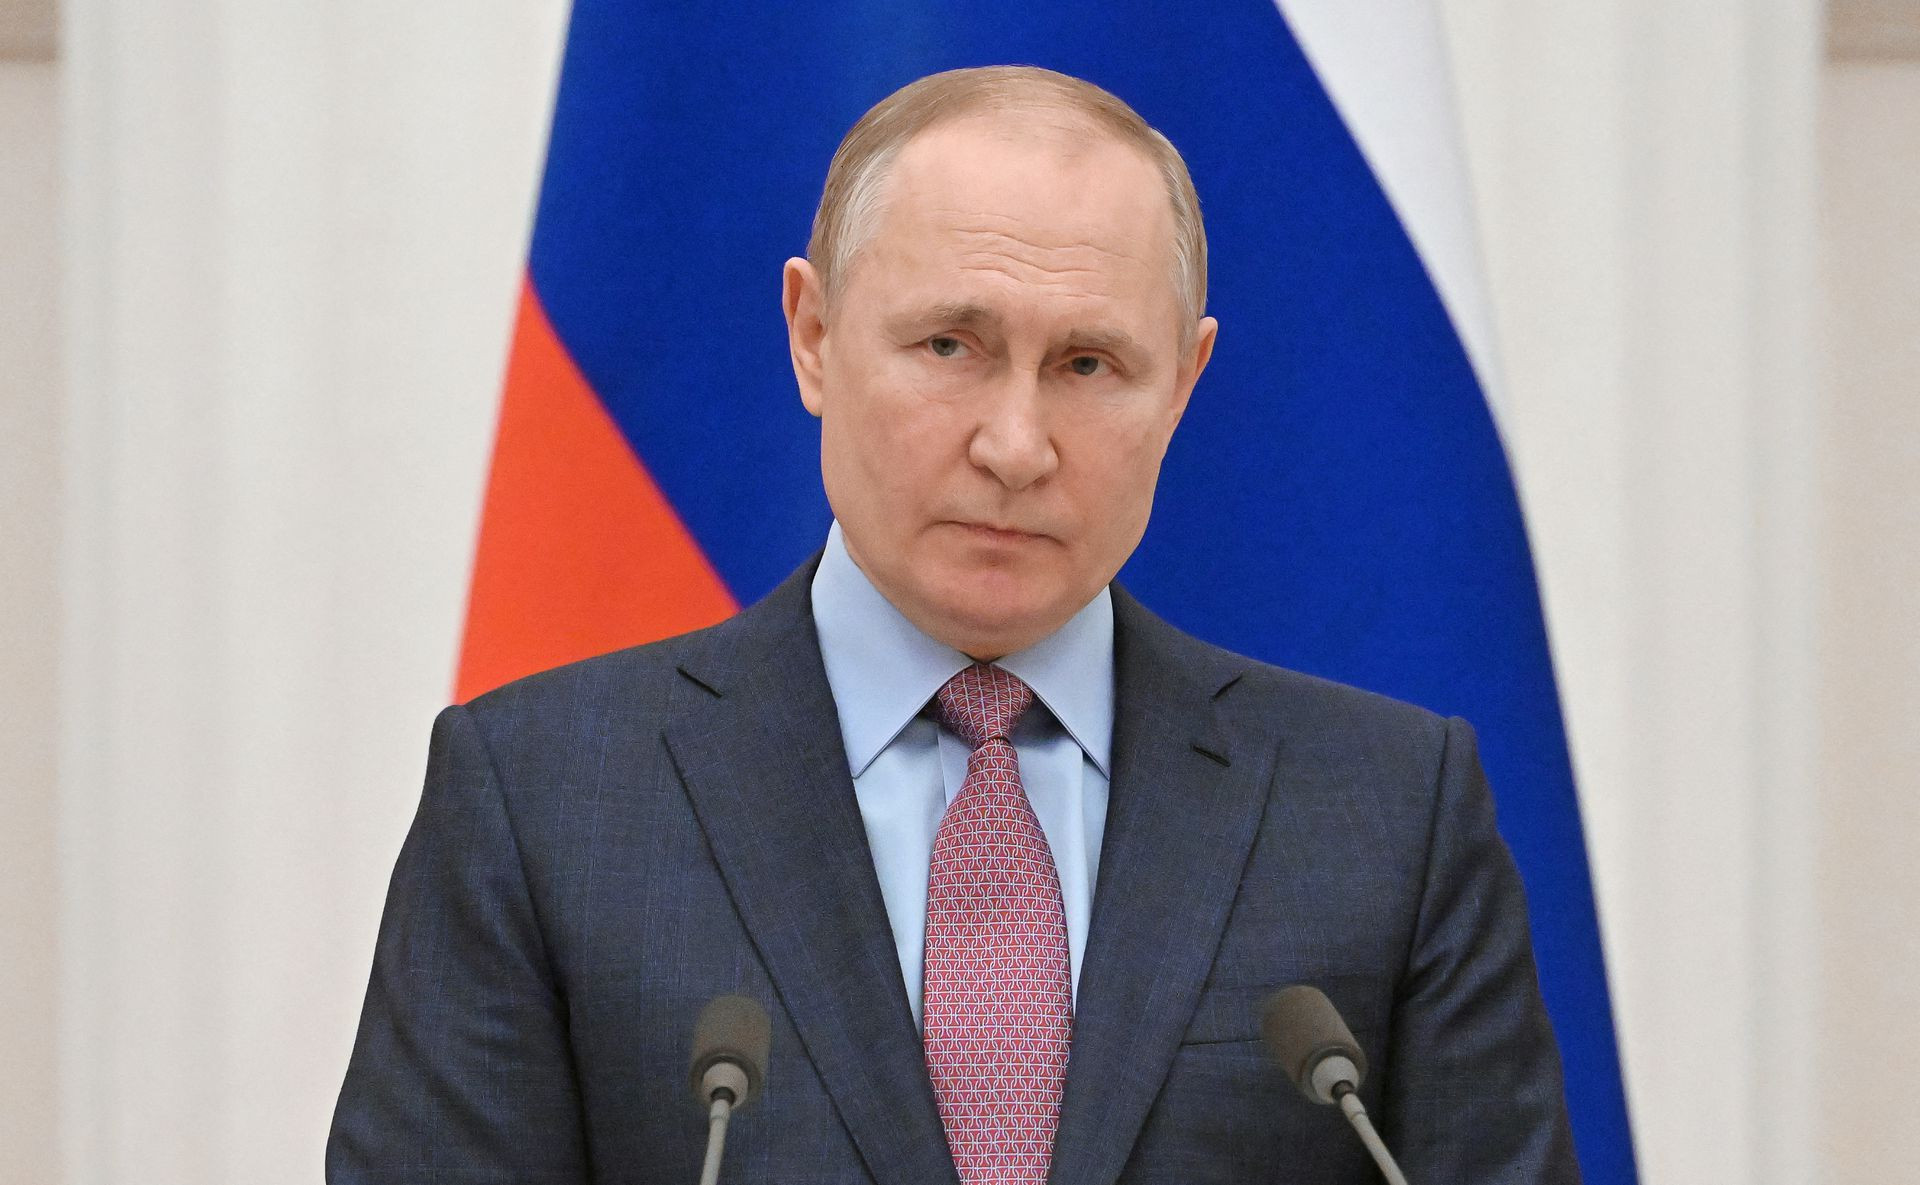 Putin tells Ukraine to stop fighting amid new ceasefire calls